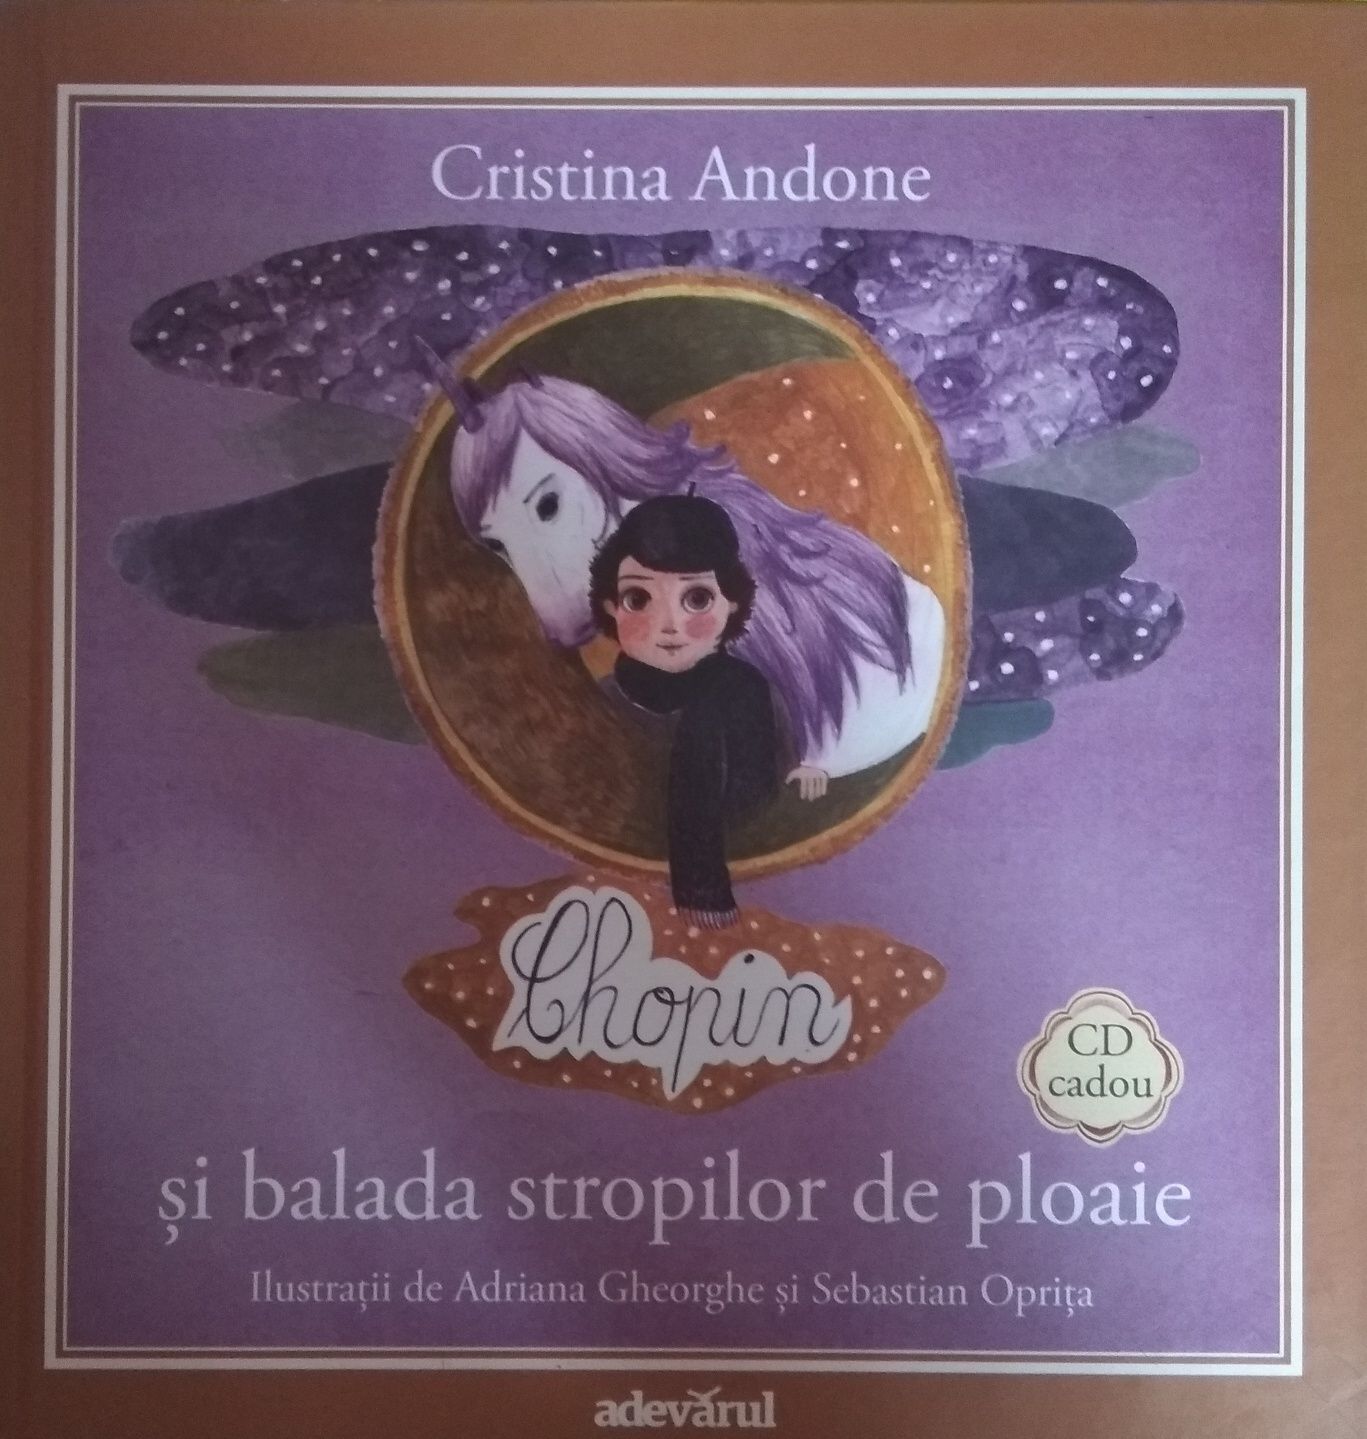 Volume muzicale, de Cristina Andone. Cu CD atașat